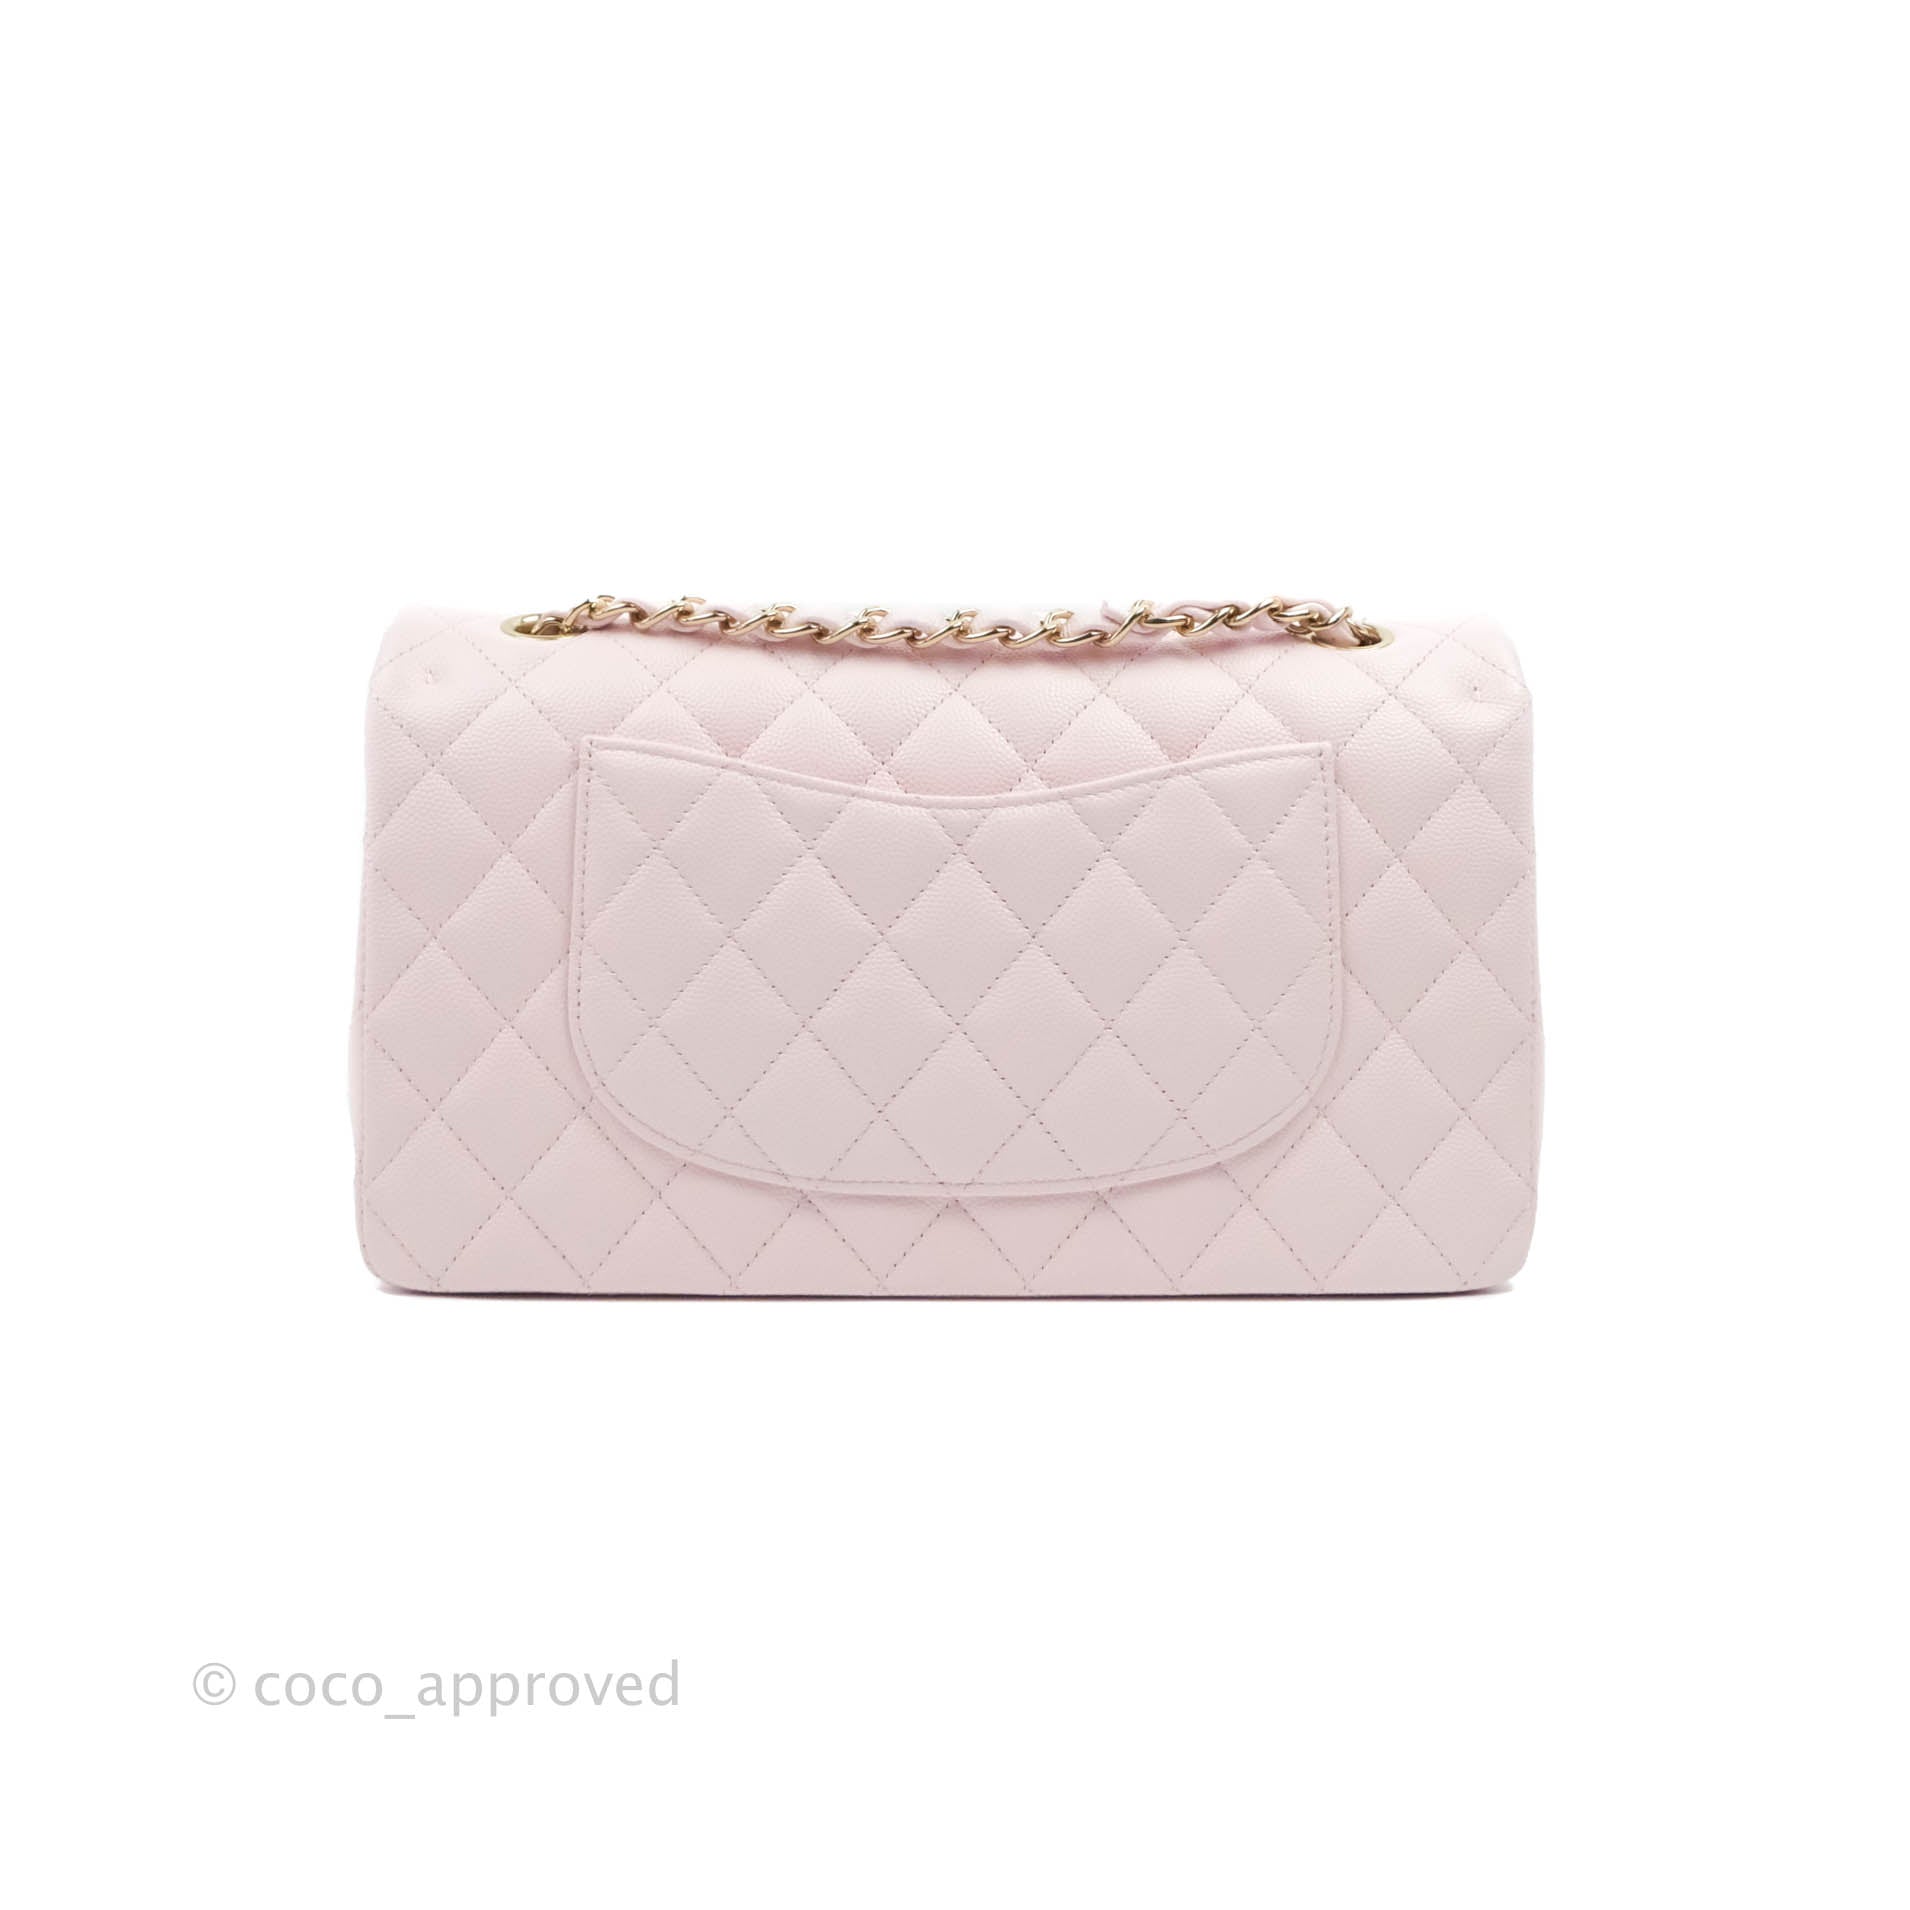 Chanel Medium Classic Flap, Caviar, Raspberry Pink GHW - Laulay Luxury